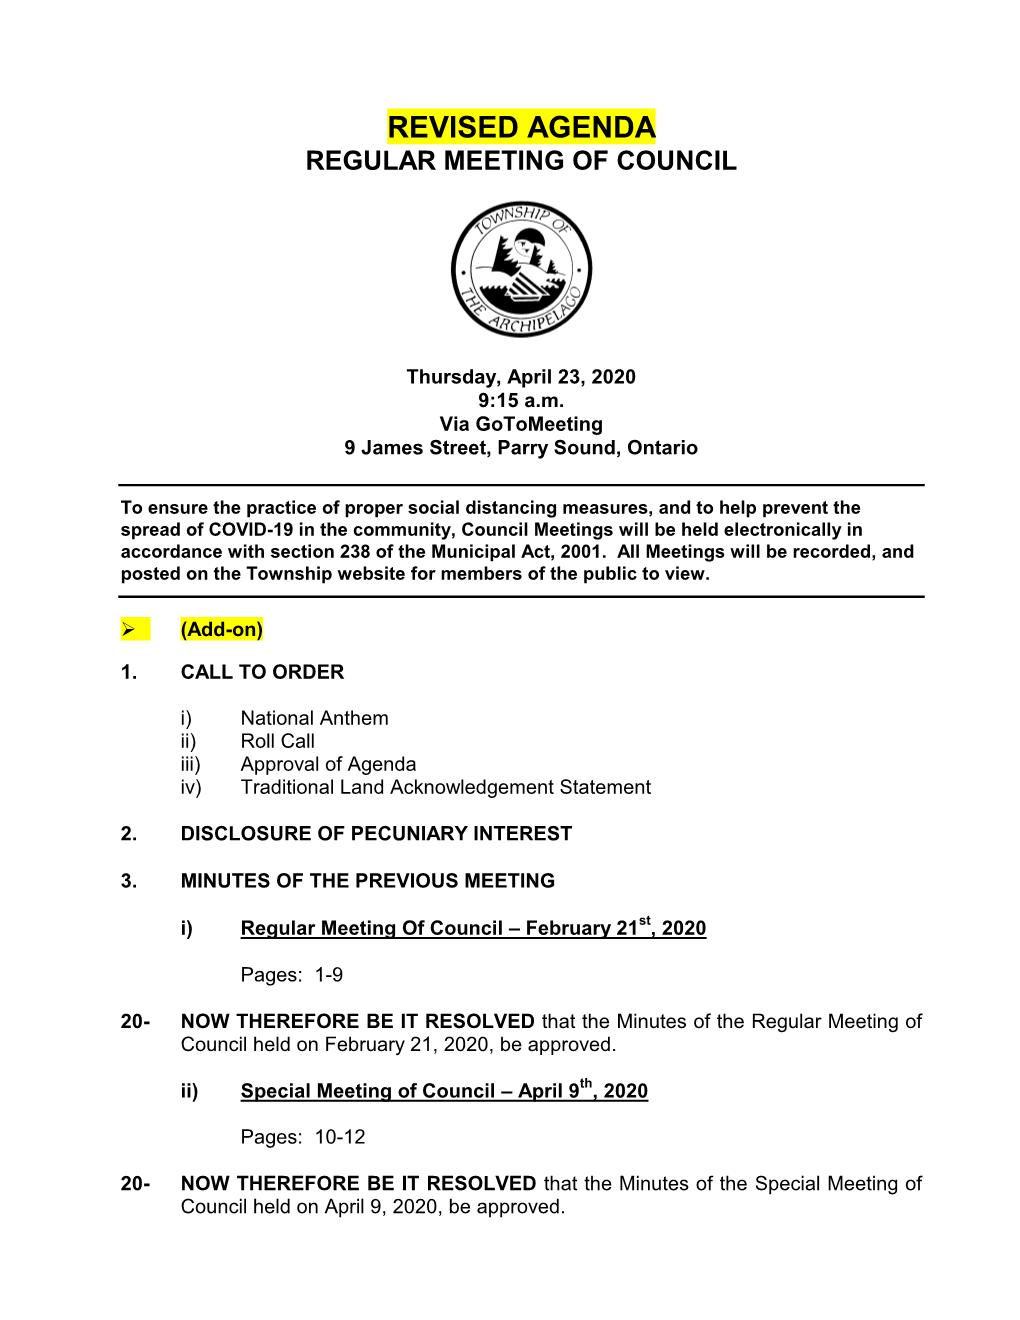 Revised Agenda Regular Meeting of Council